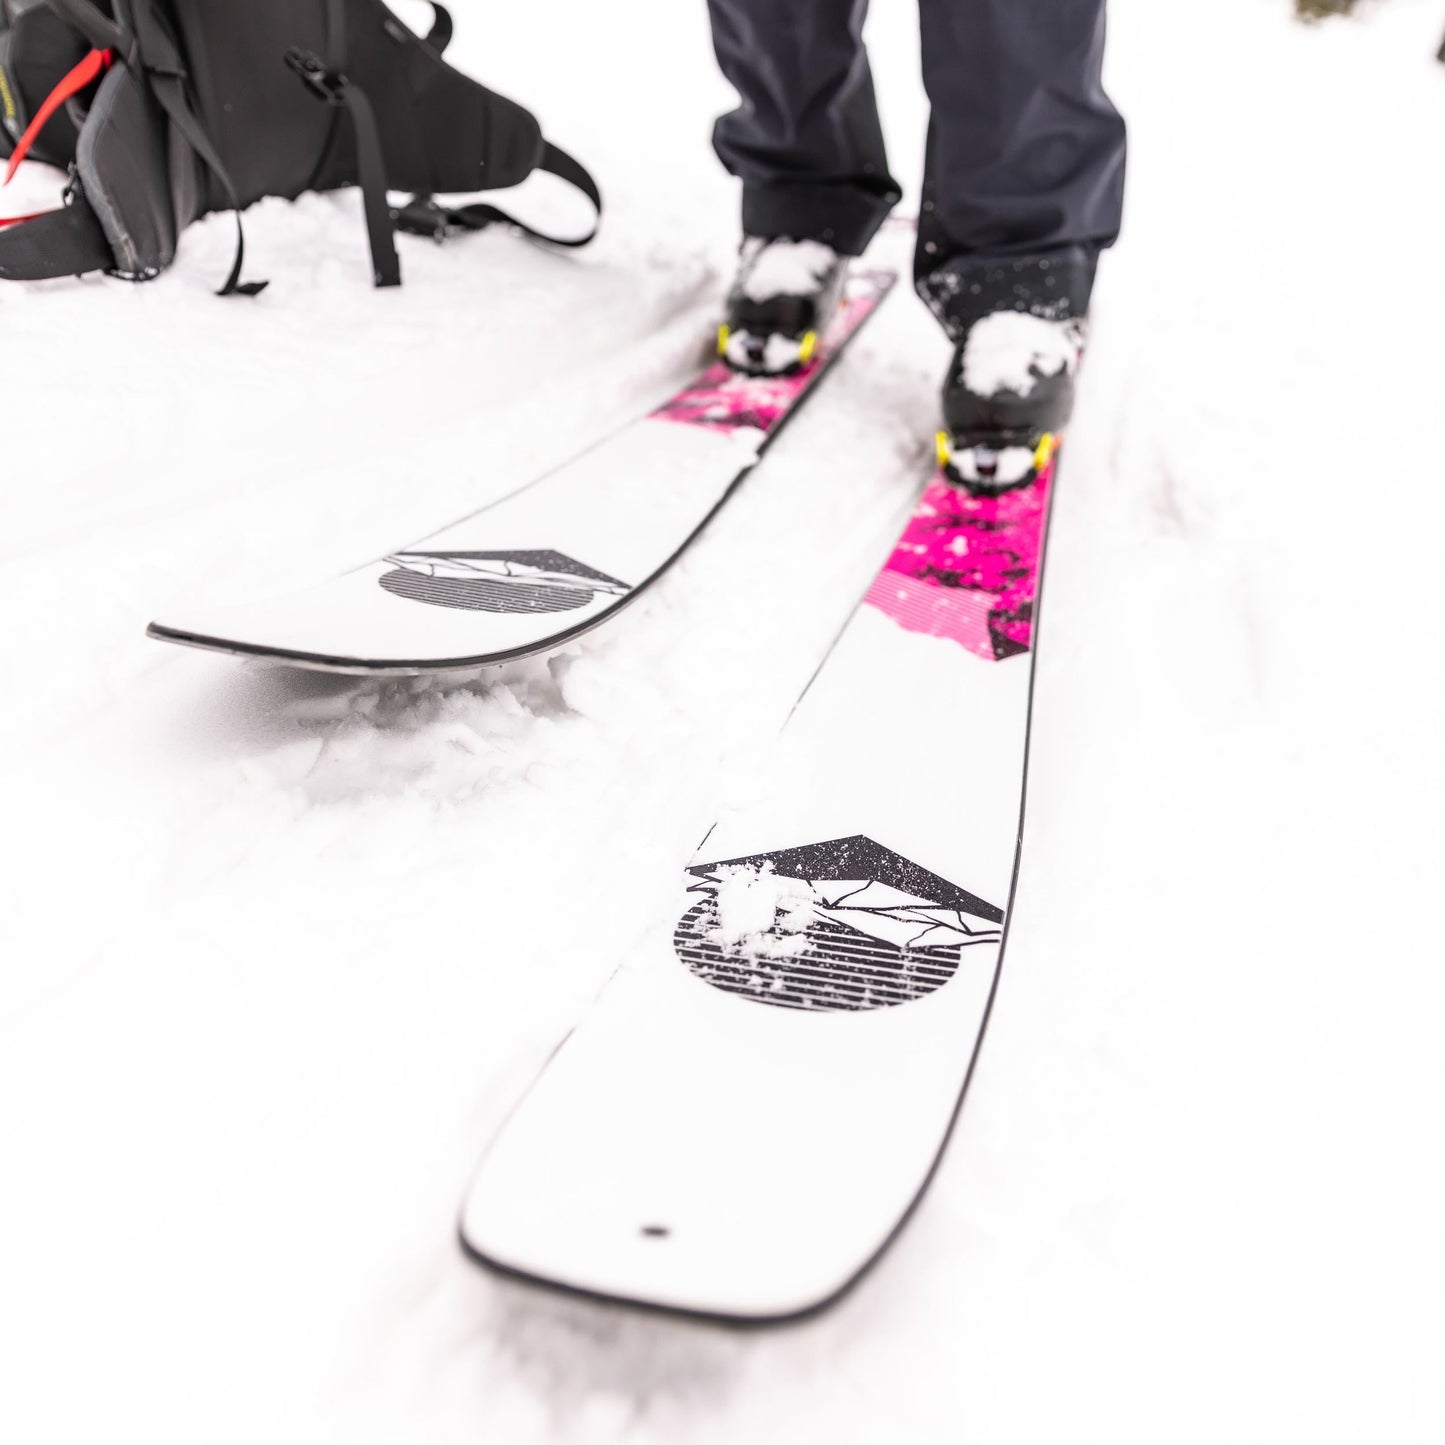 Skyline Skis with Alpine Bindings (Resort) Demo